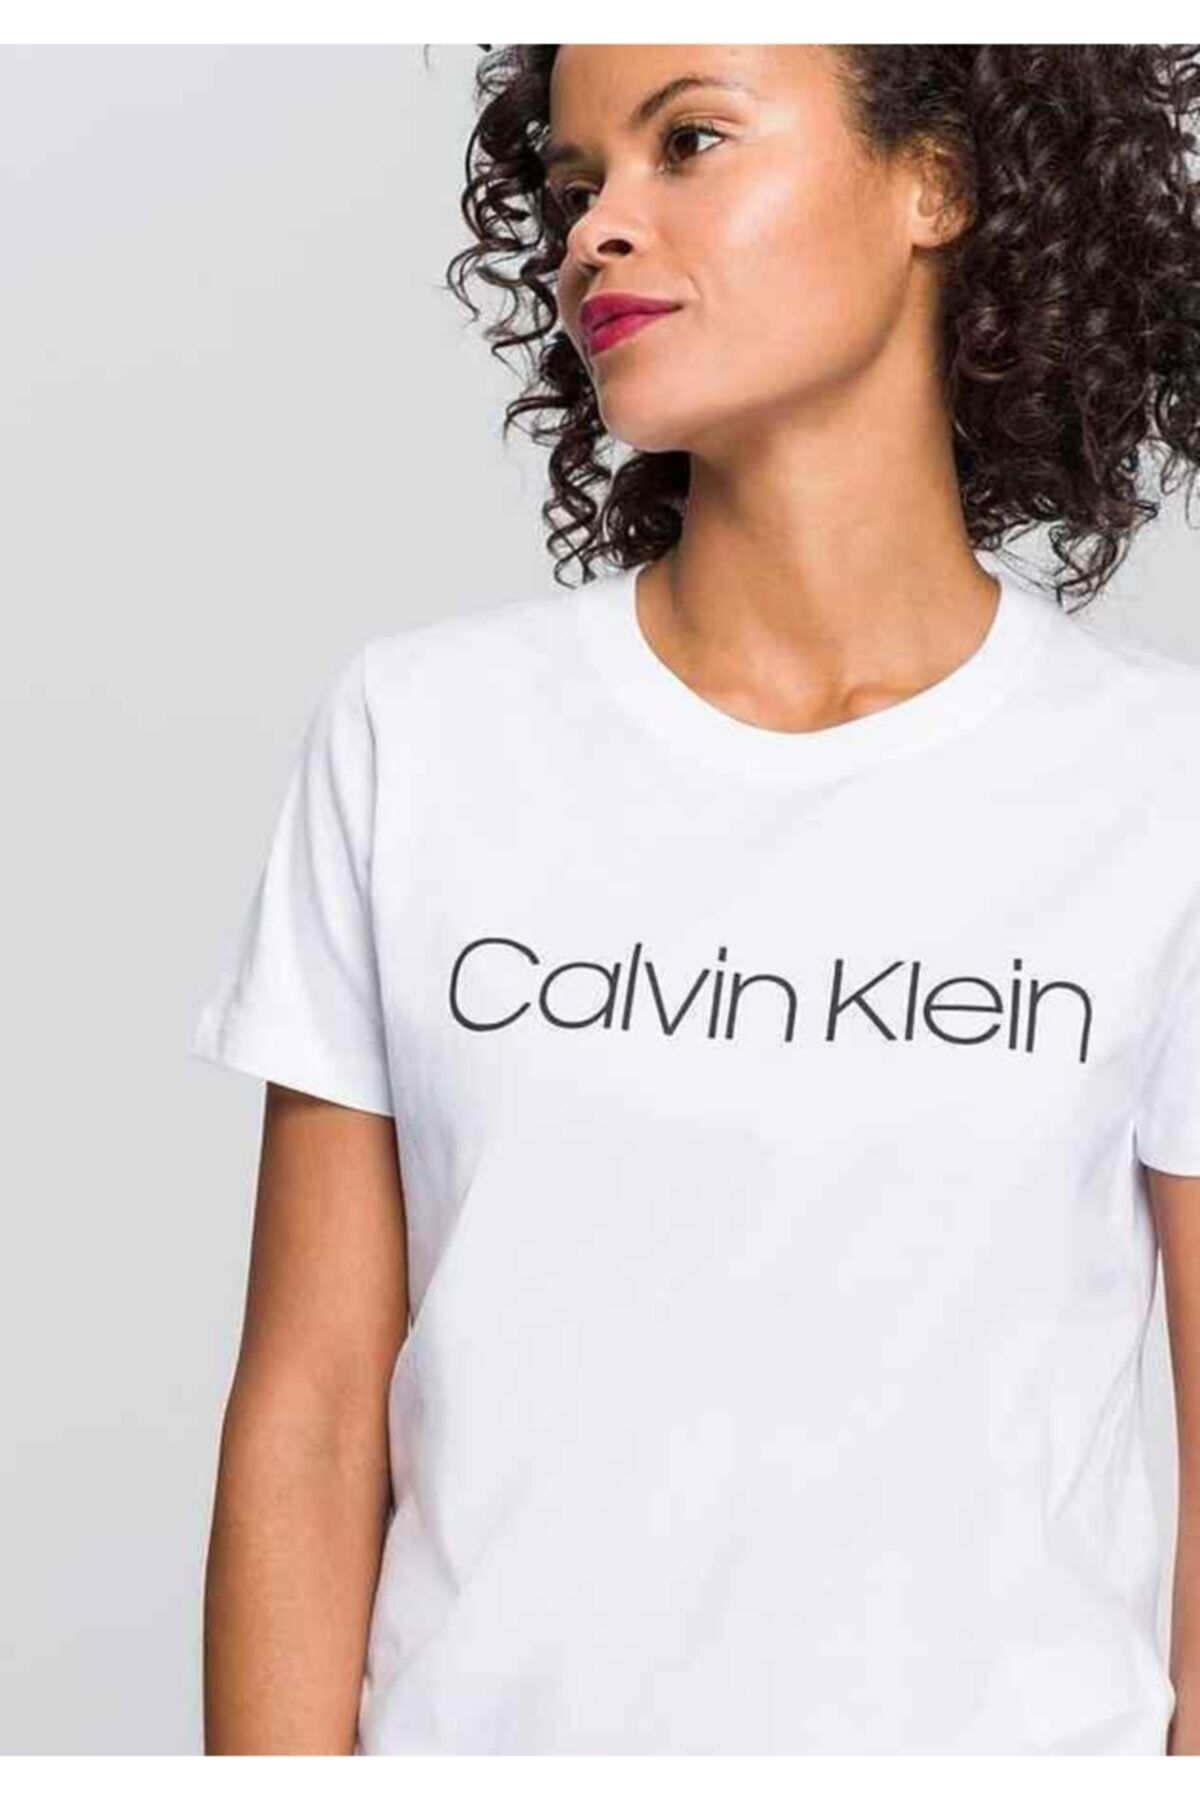 Calvin Klein Crew Neck Woman's Kadın T-shirt